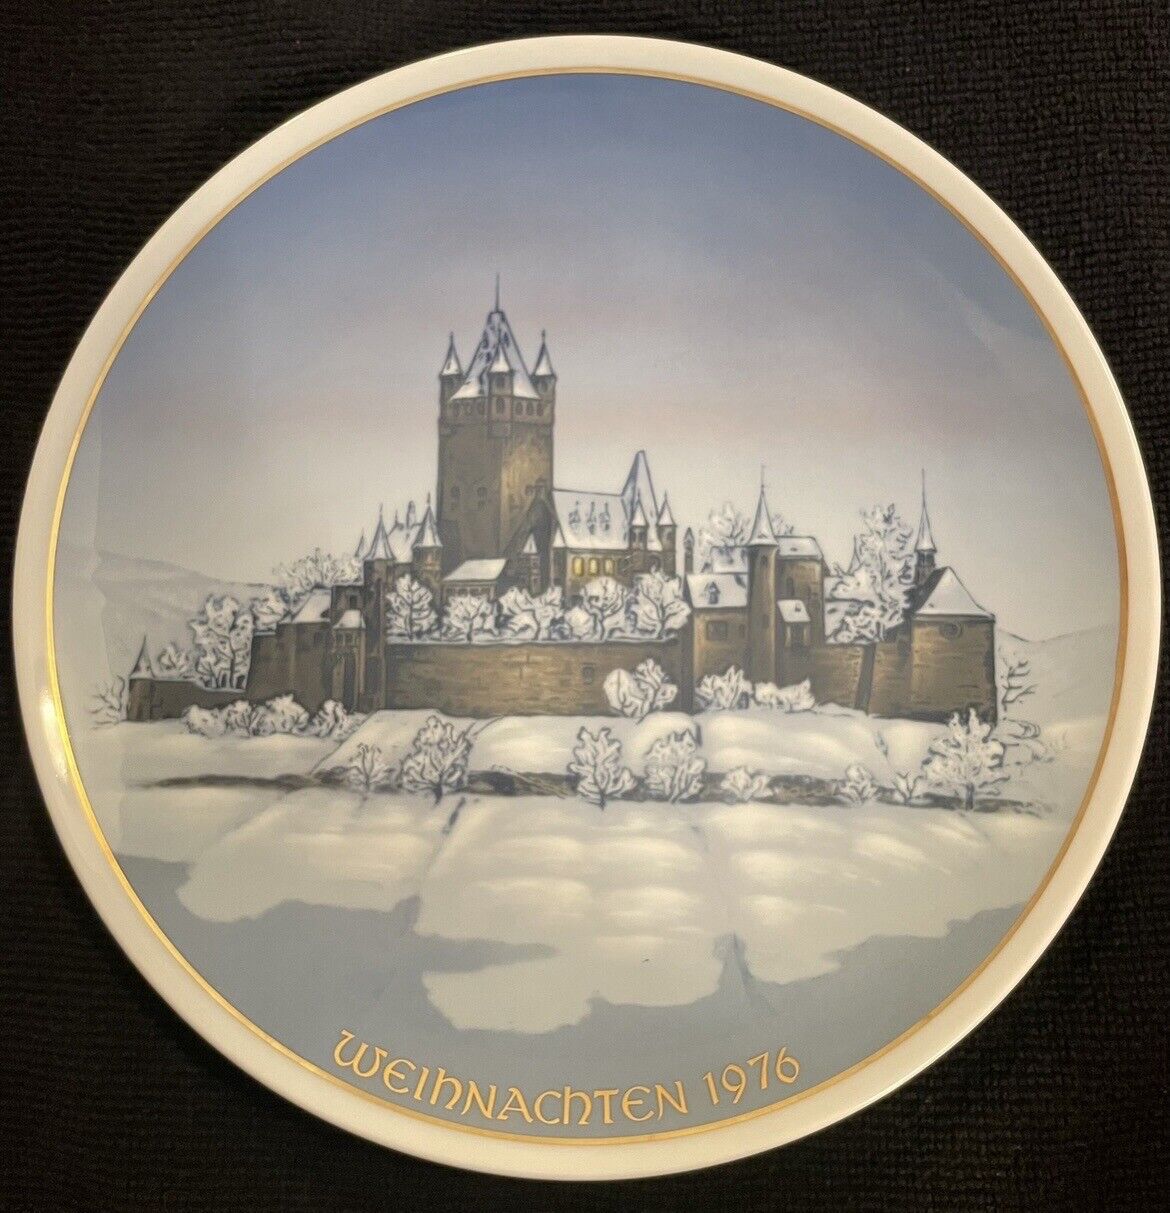 ROSENTHAL 1976 Christmas Weihnachten Plate: Castle Cochem